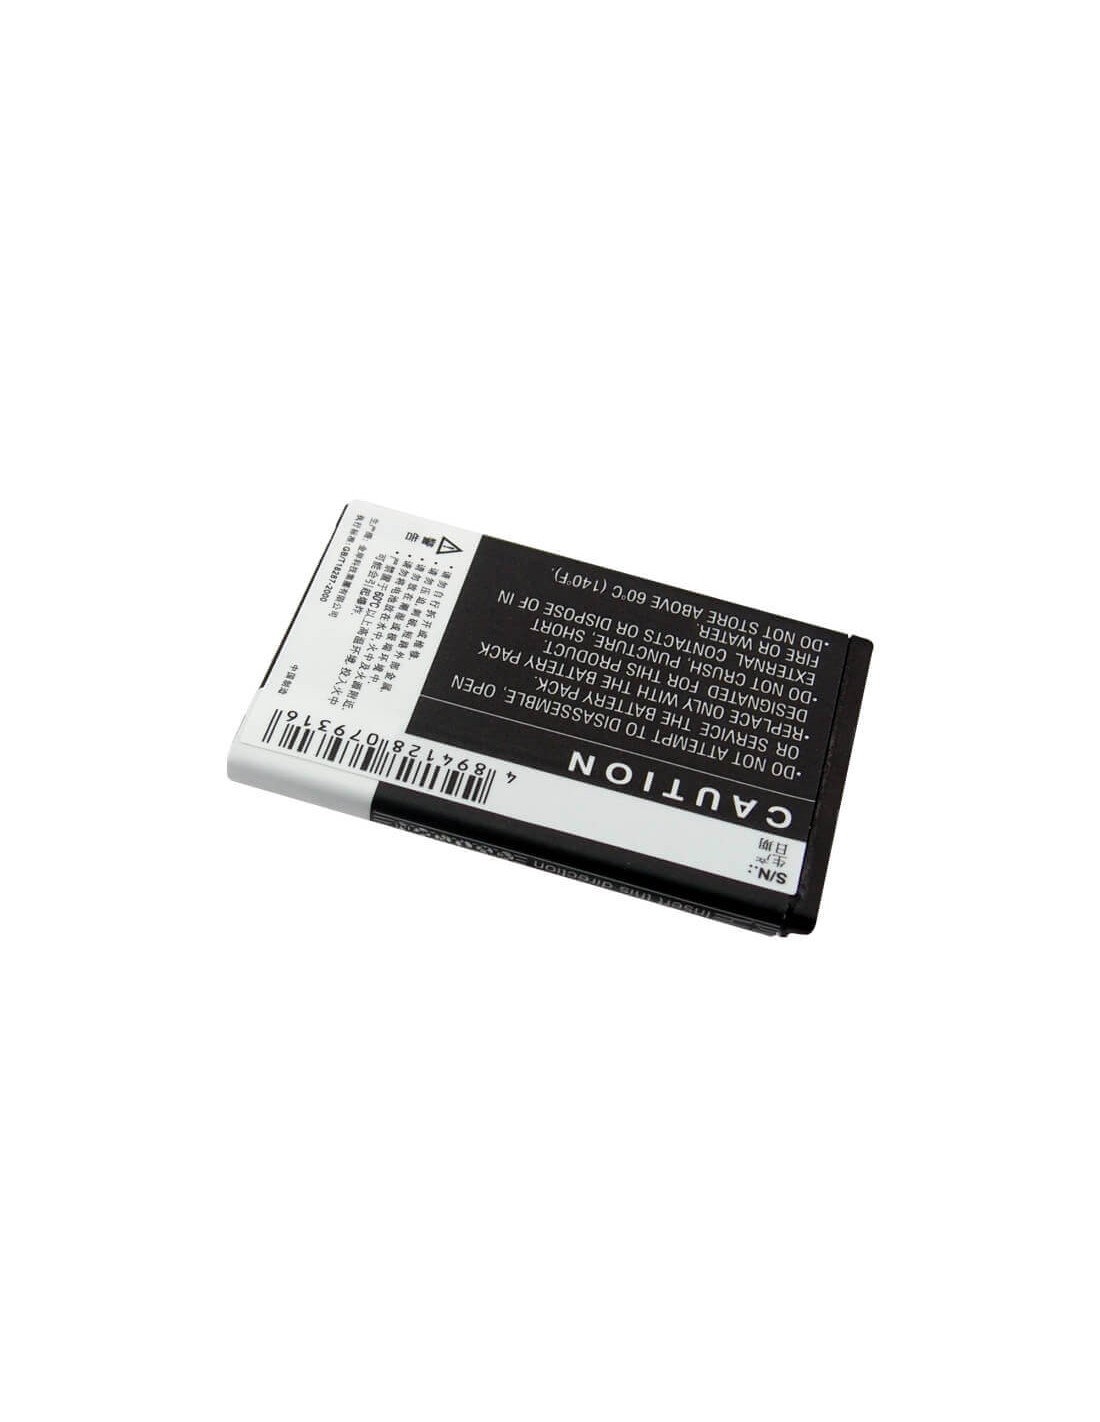 Battery for Huawei HWM636, HWM636-R, M318 3.7V, 950mAh - 3.52Wh